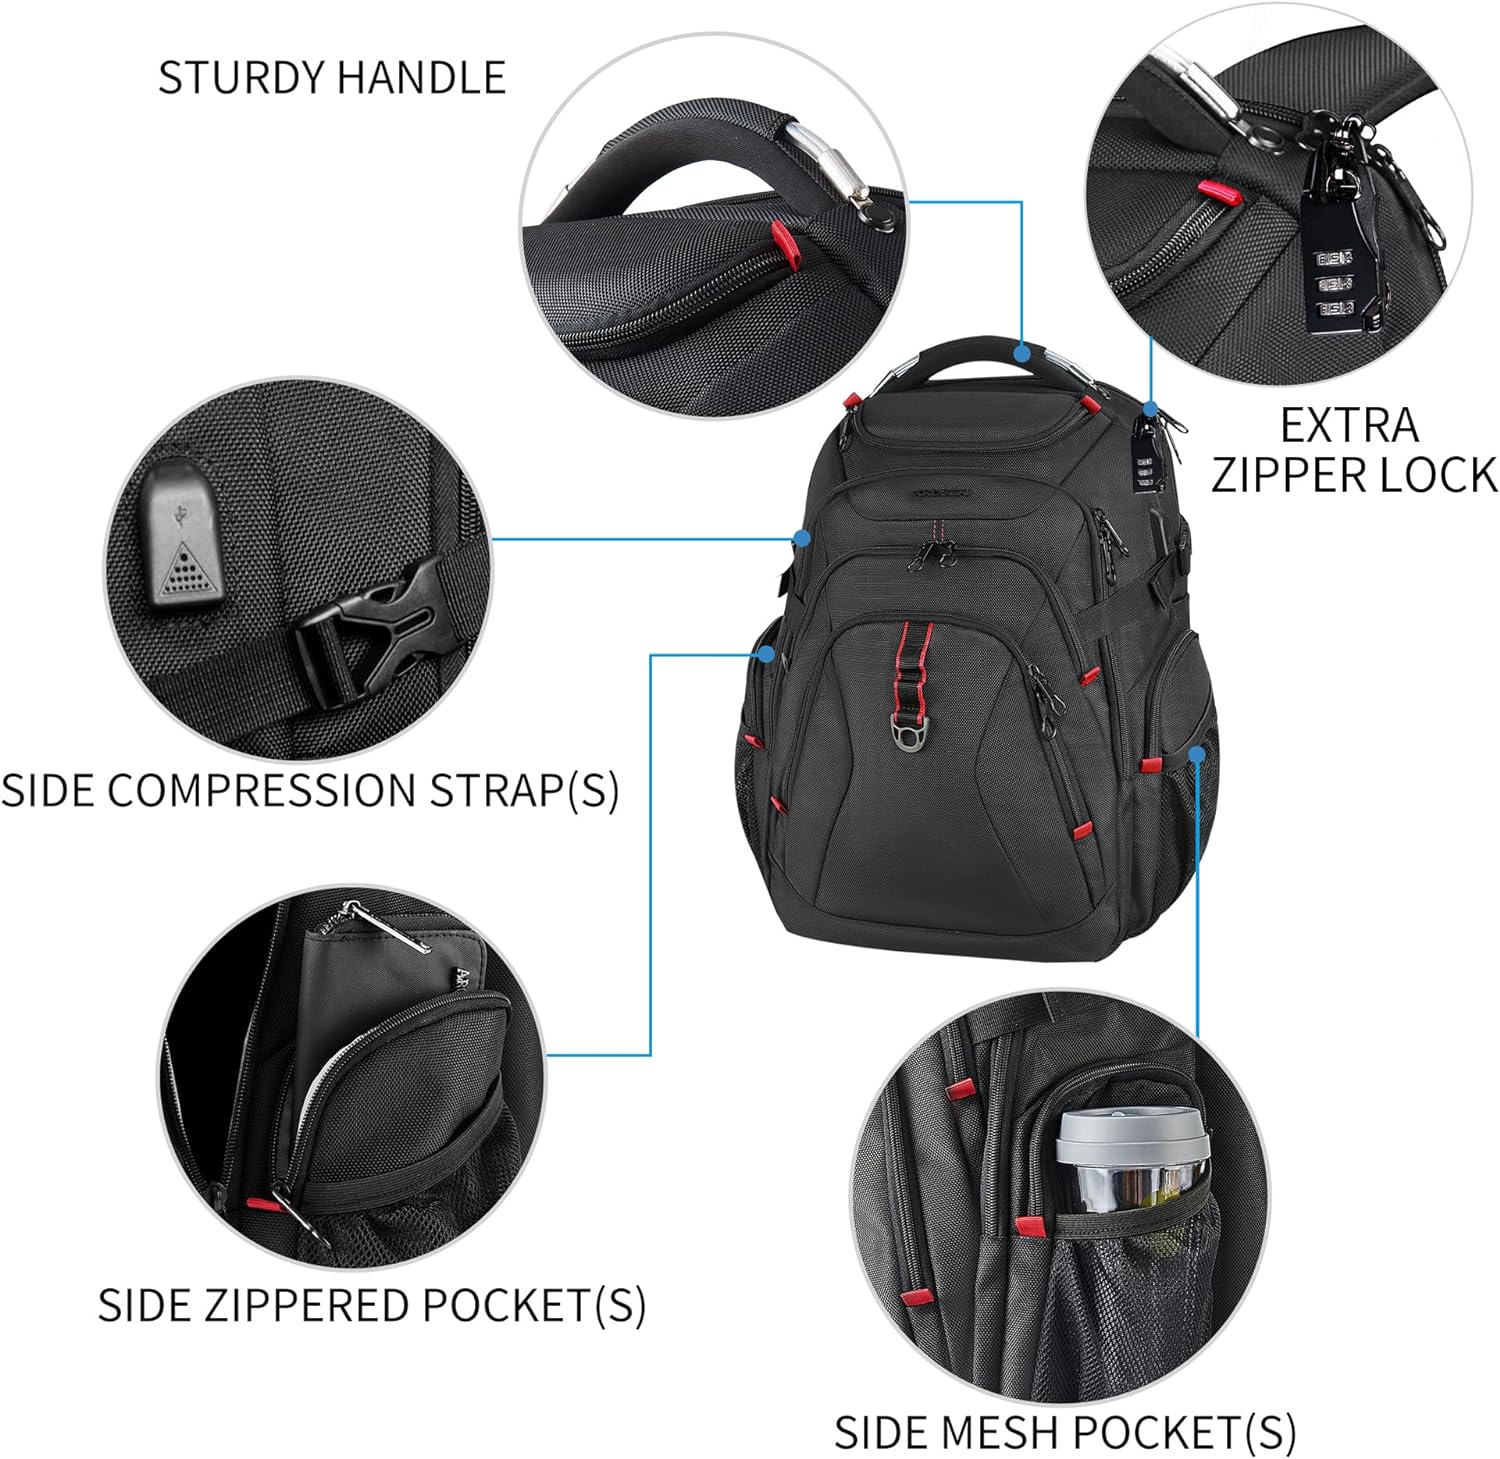 KROSER Travel Laptop Backpack 17.3 Inch XL Computer Backpack with Hard Shell Saferoom RFID Pockets Water-Repellent Business College Daypack Stylish Bag for Men/Women-Black